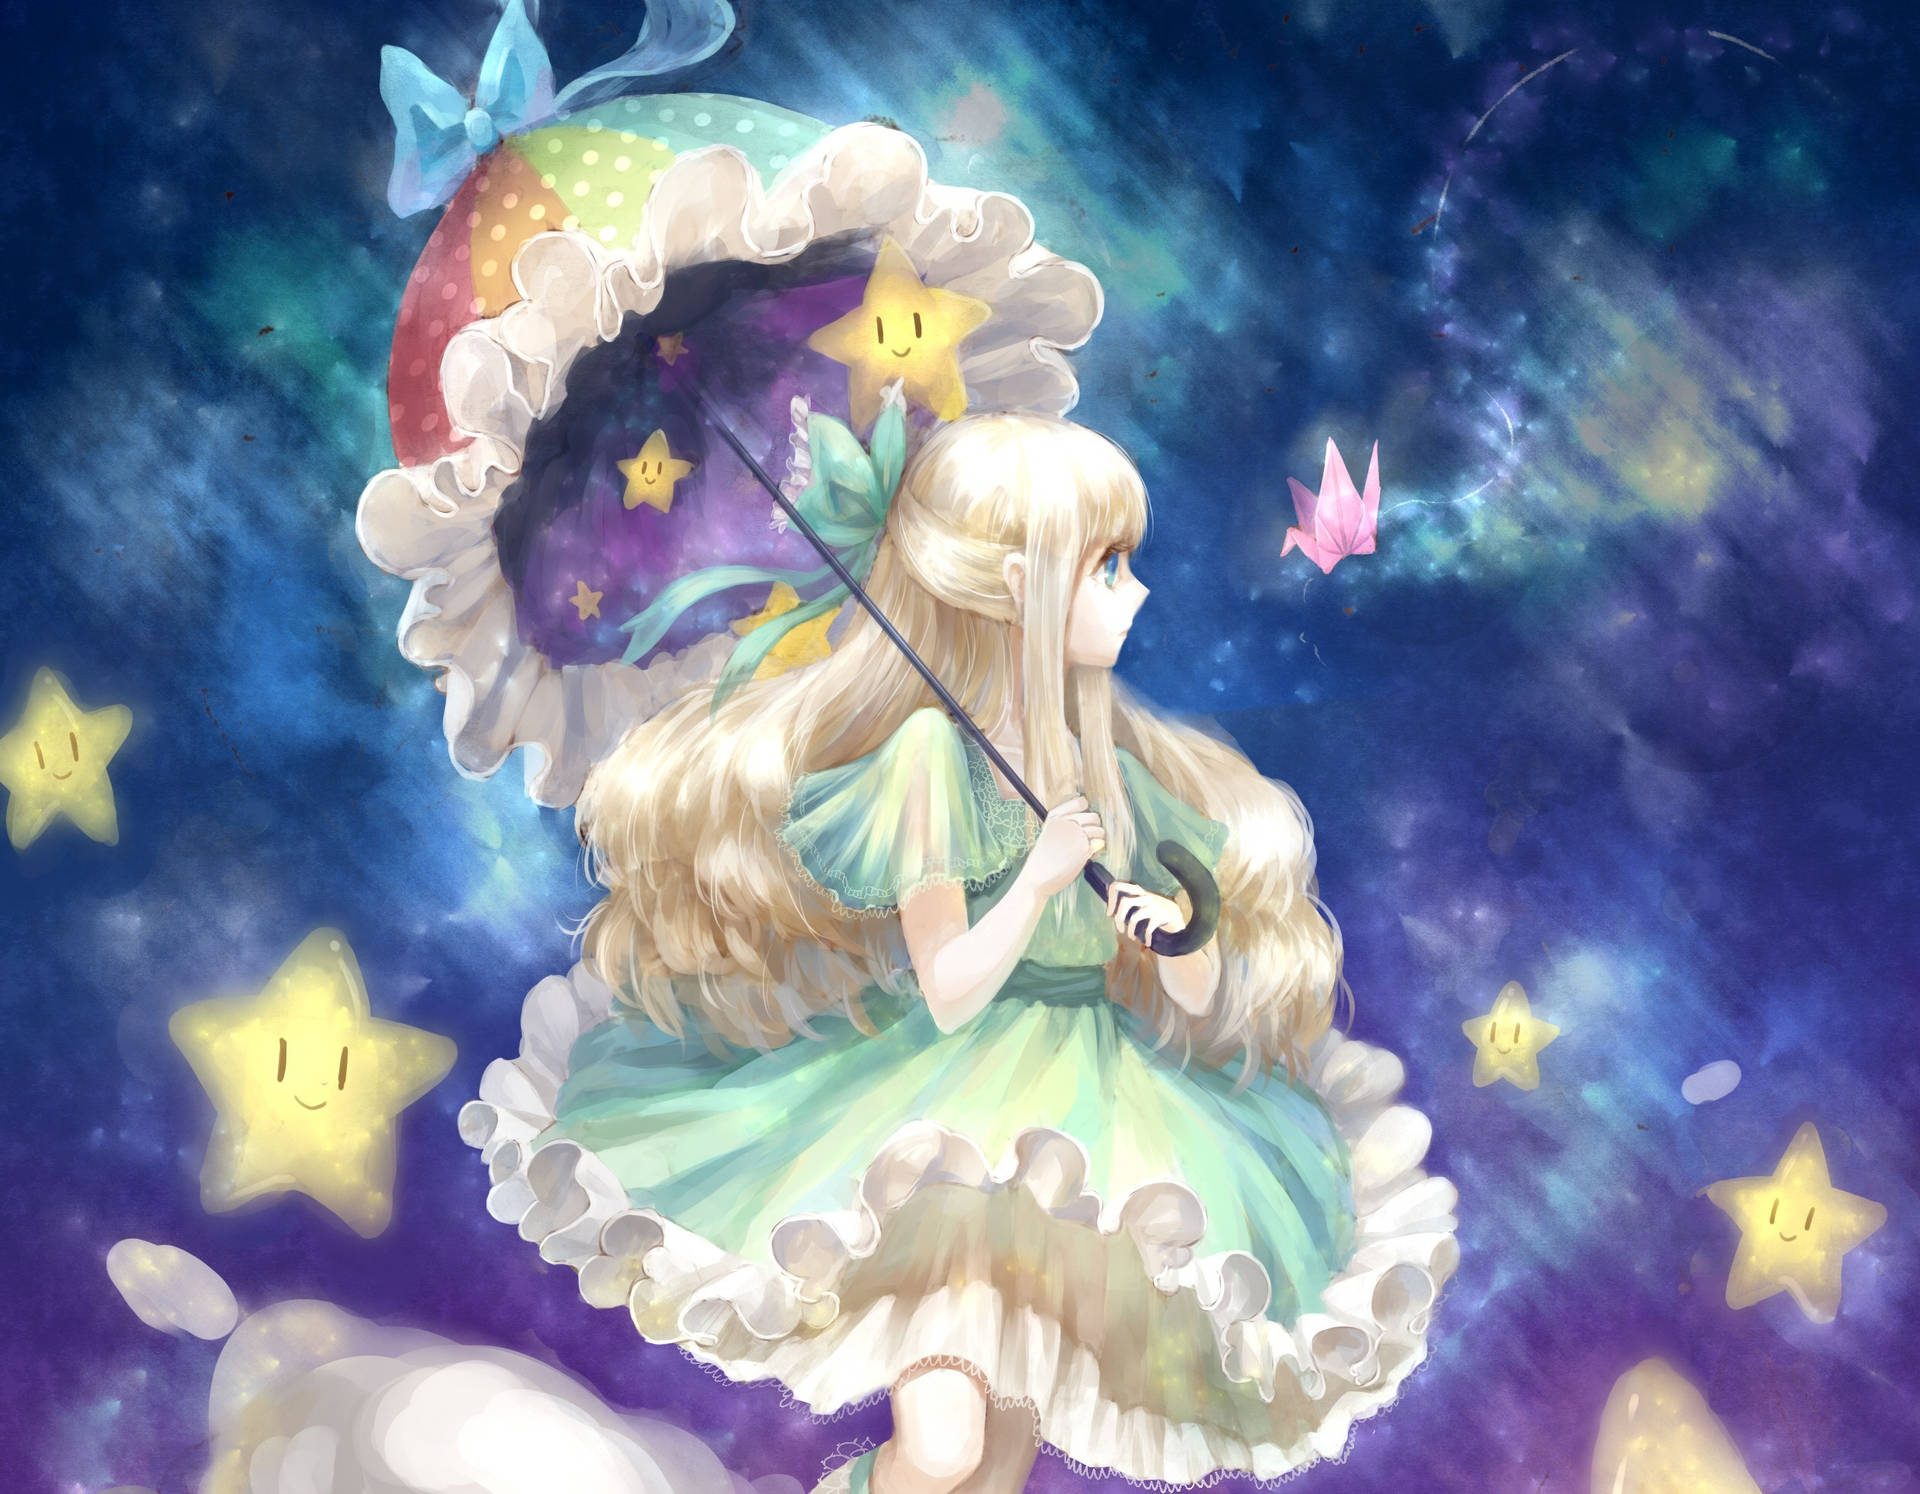 Enchanting Anime Girl In A Serene Setting Background